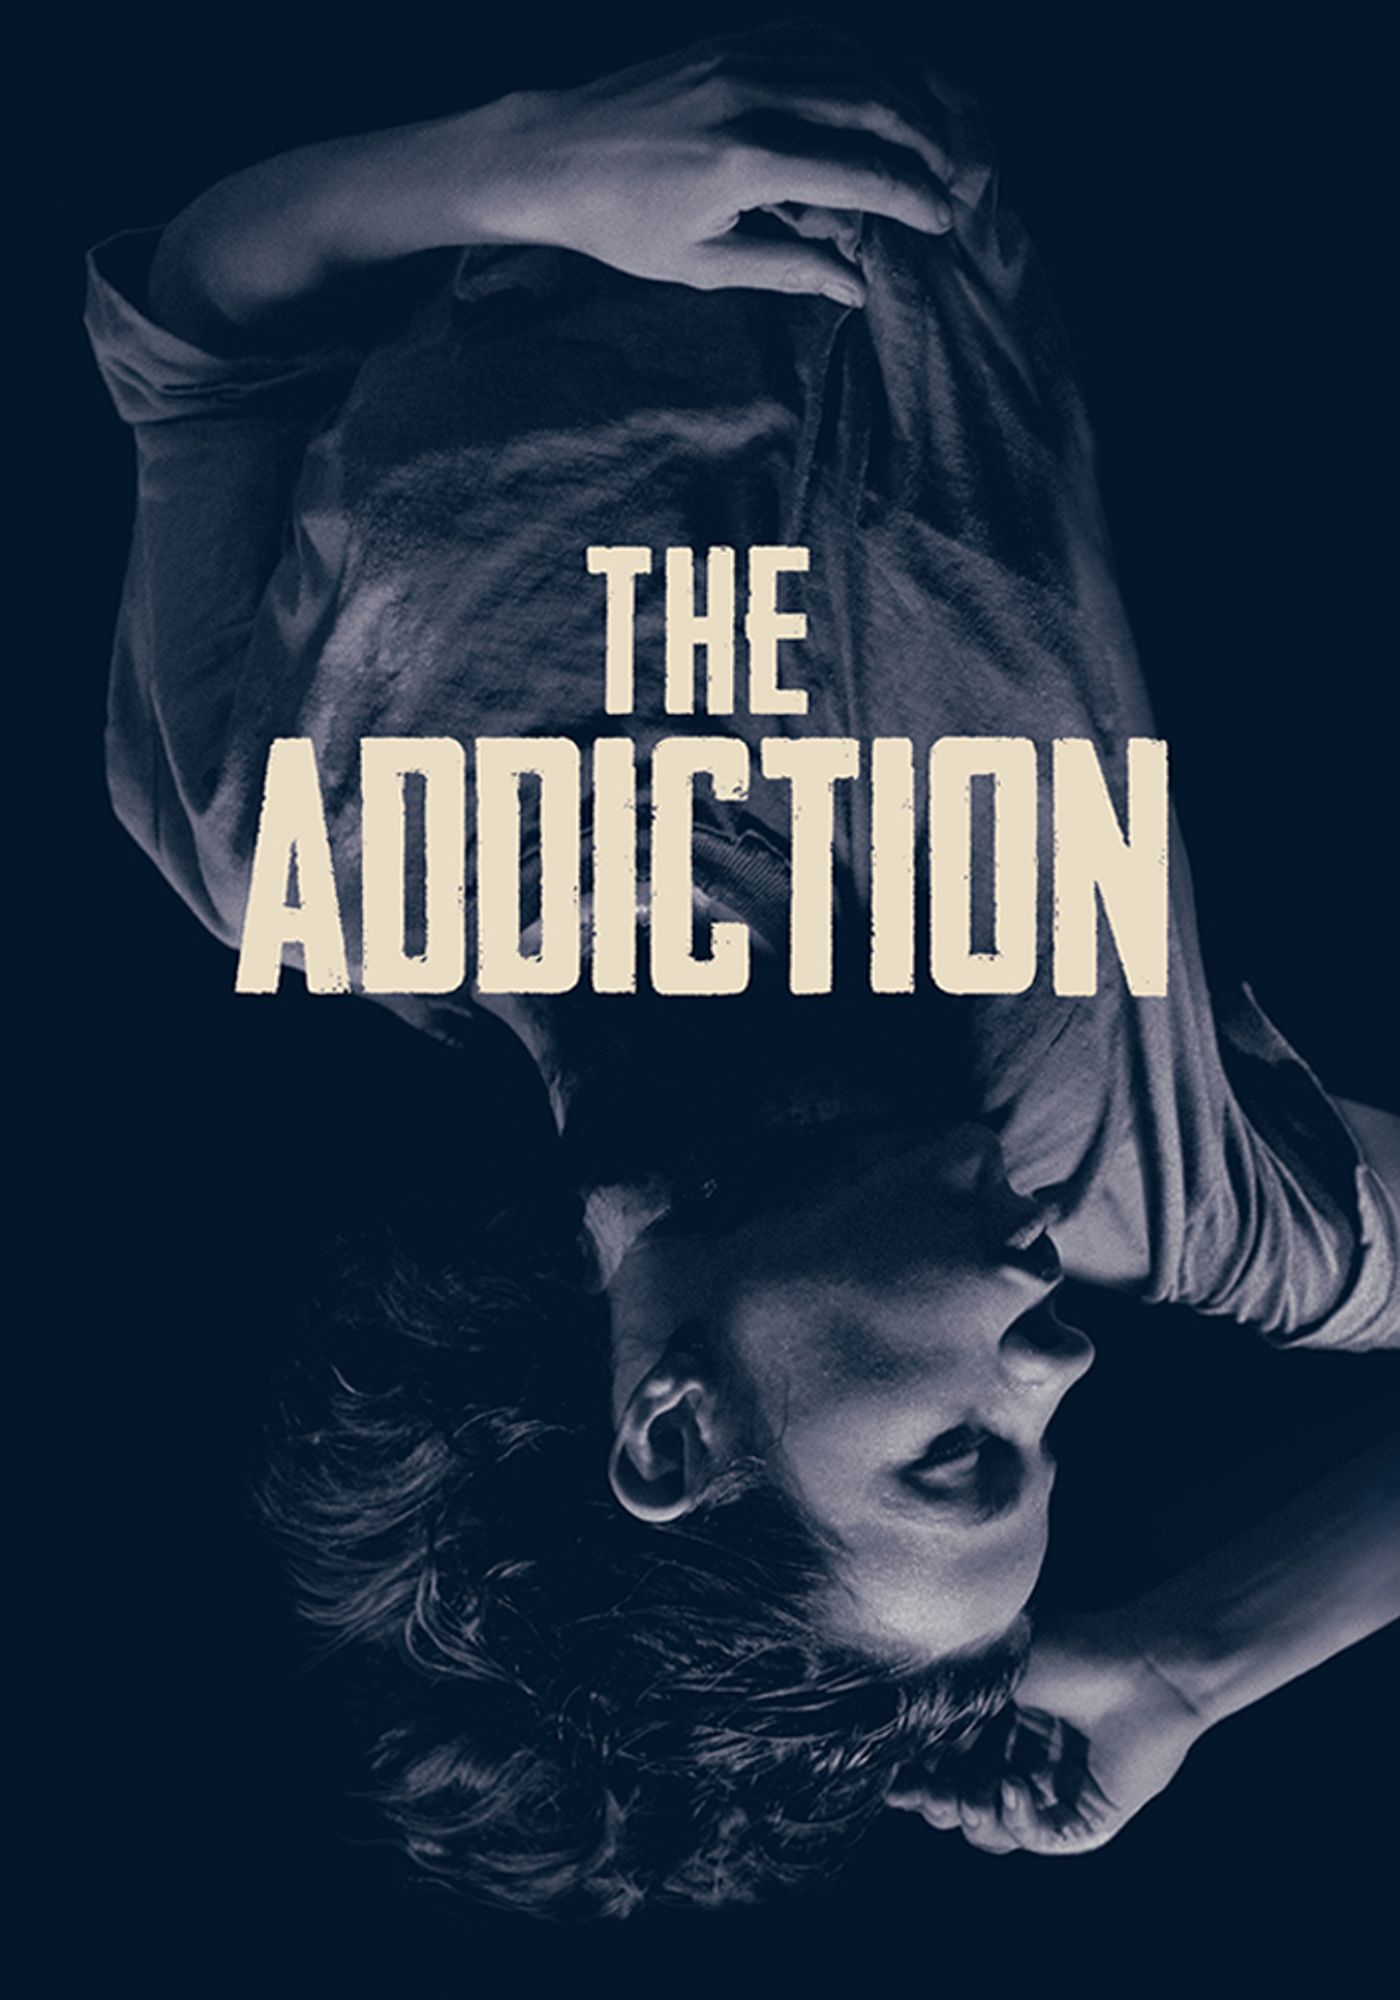 The adicction